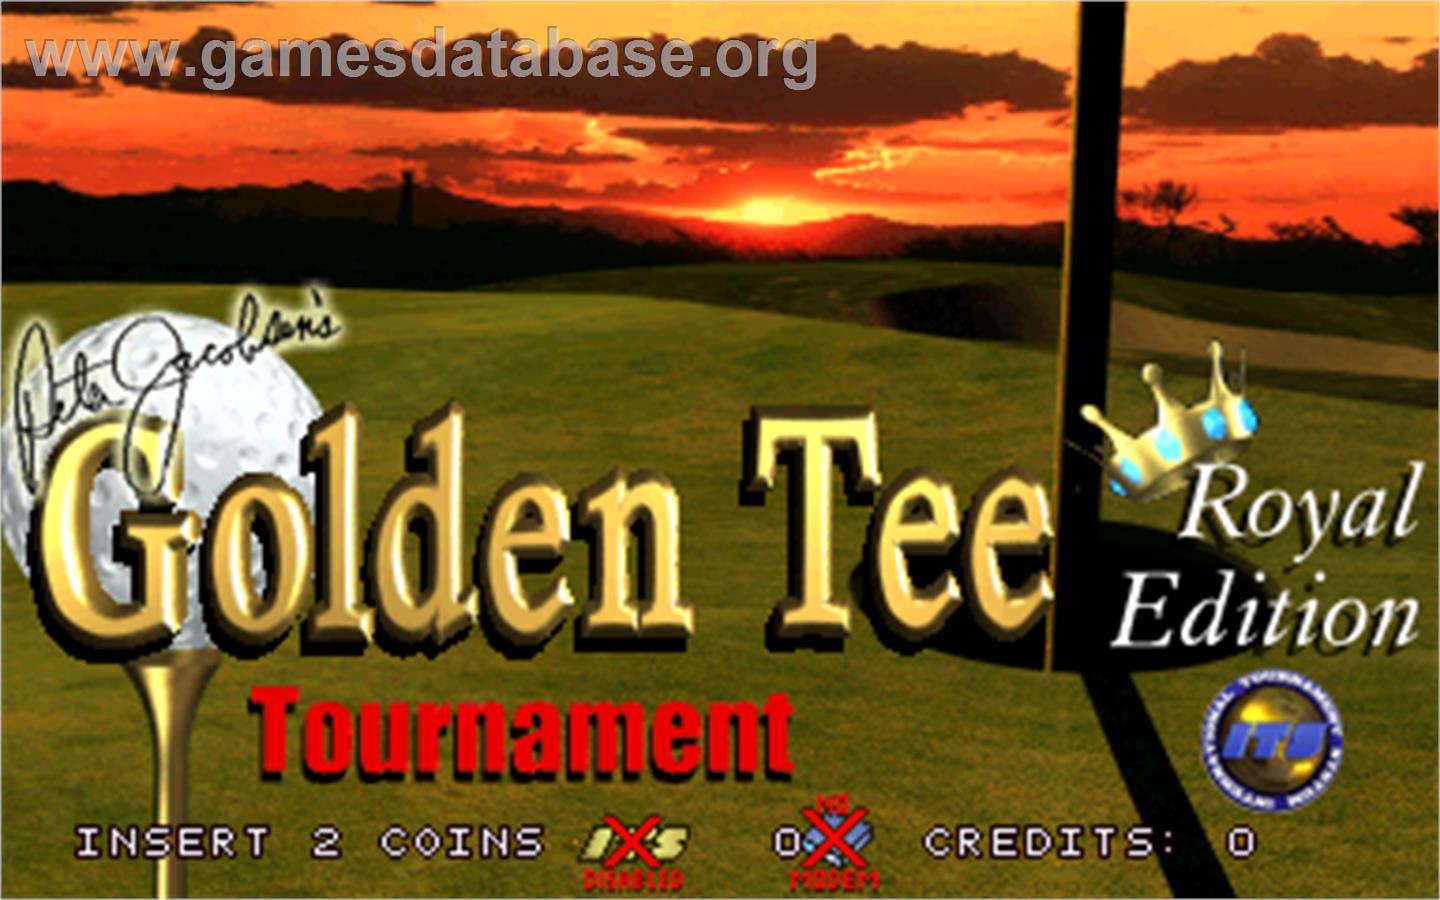 Golden Tee Royal Edition Tournament - Arcade - Artwork - Title Screen